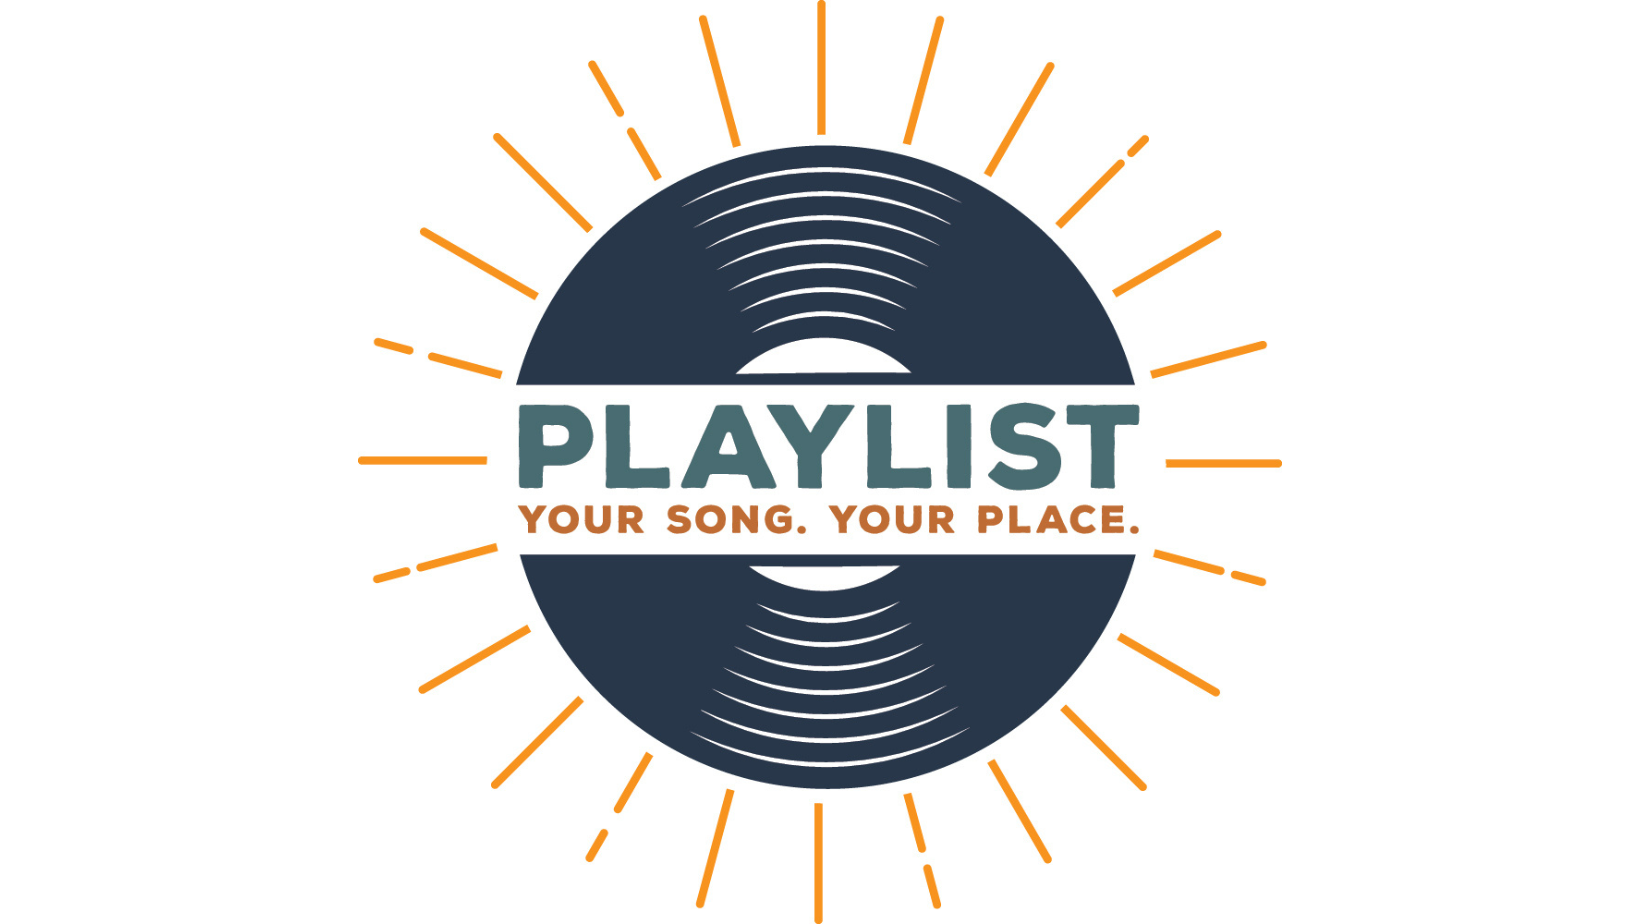 The Playlist logo